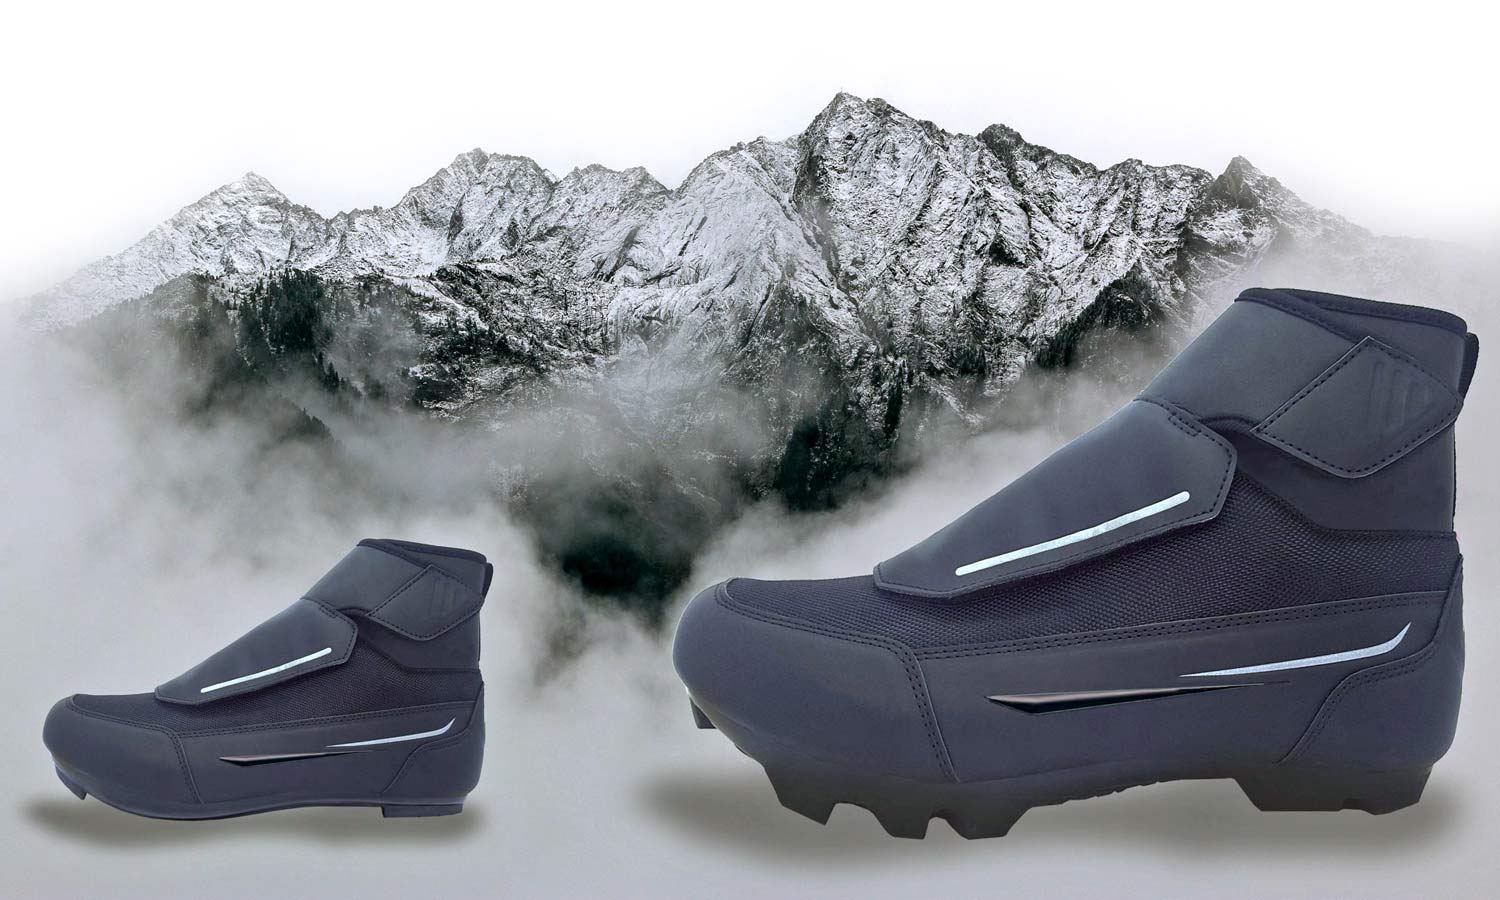 FLR Defender updates affordable winter shoes for road or mountain biking